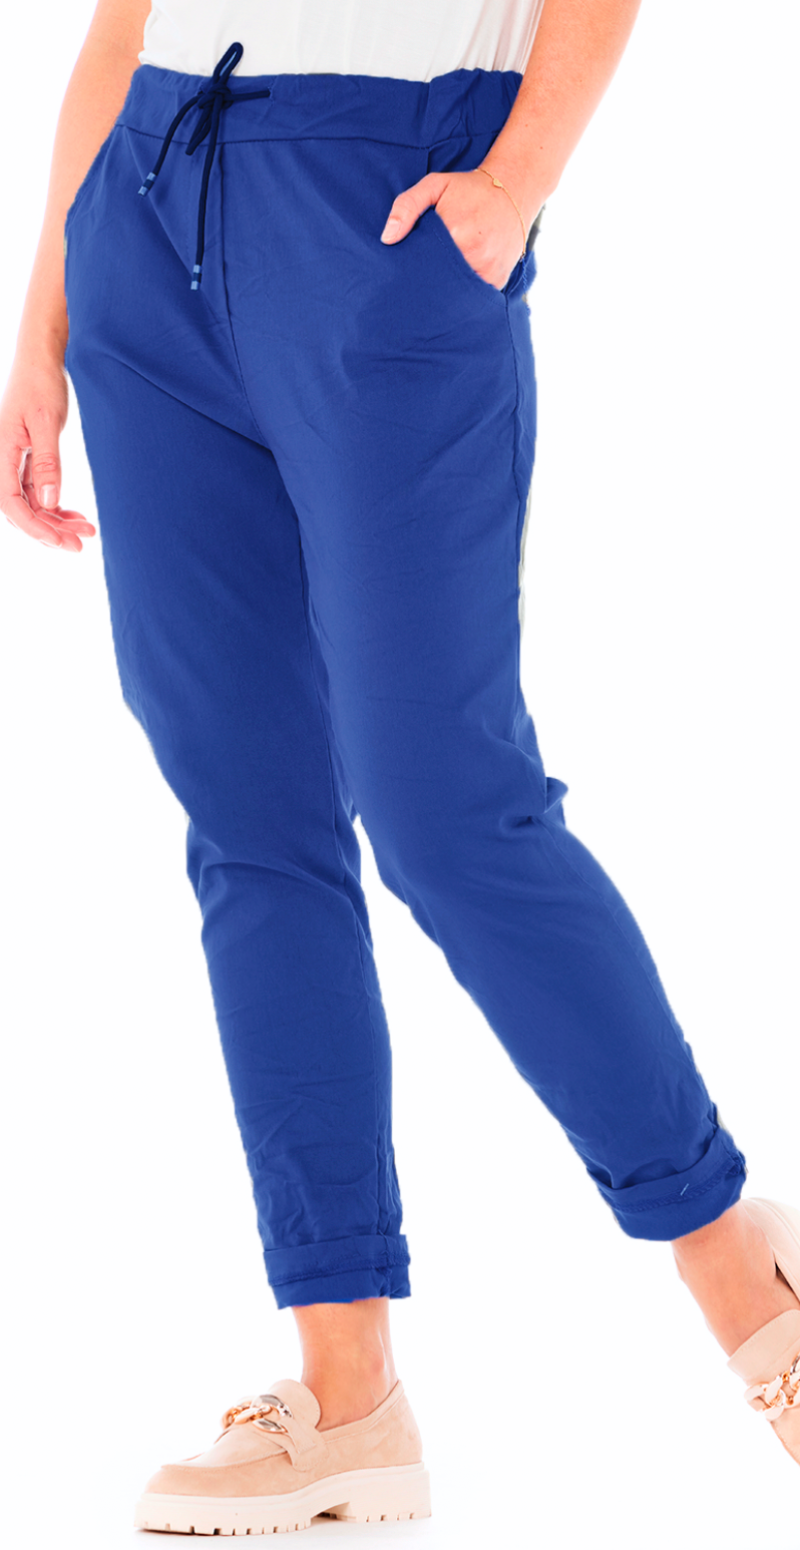 Bukser med stræk og snøre i taljen blå